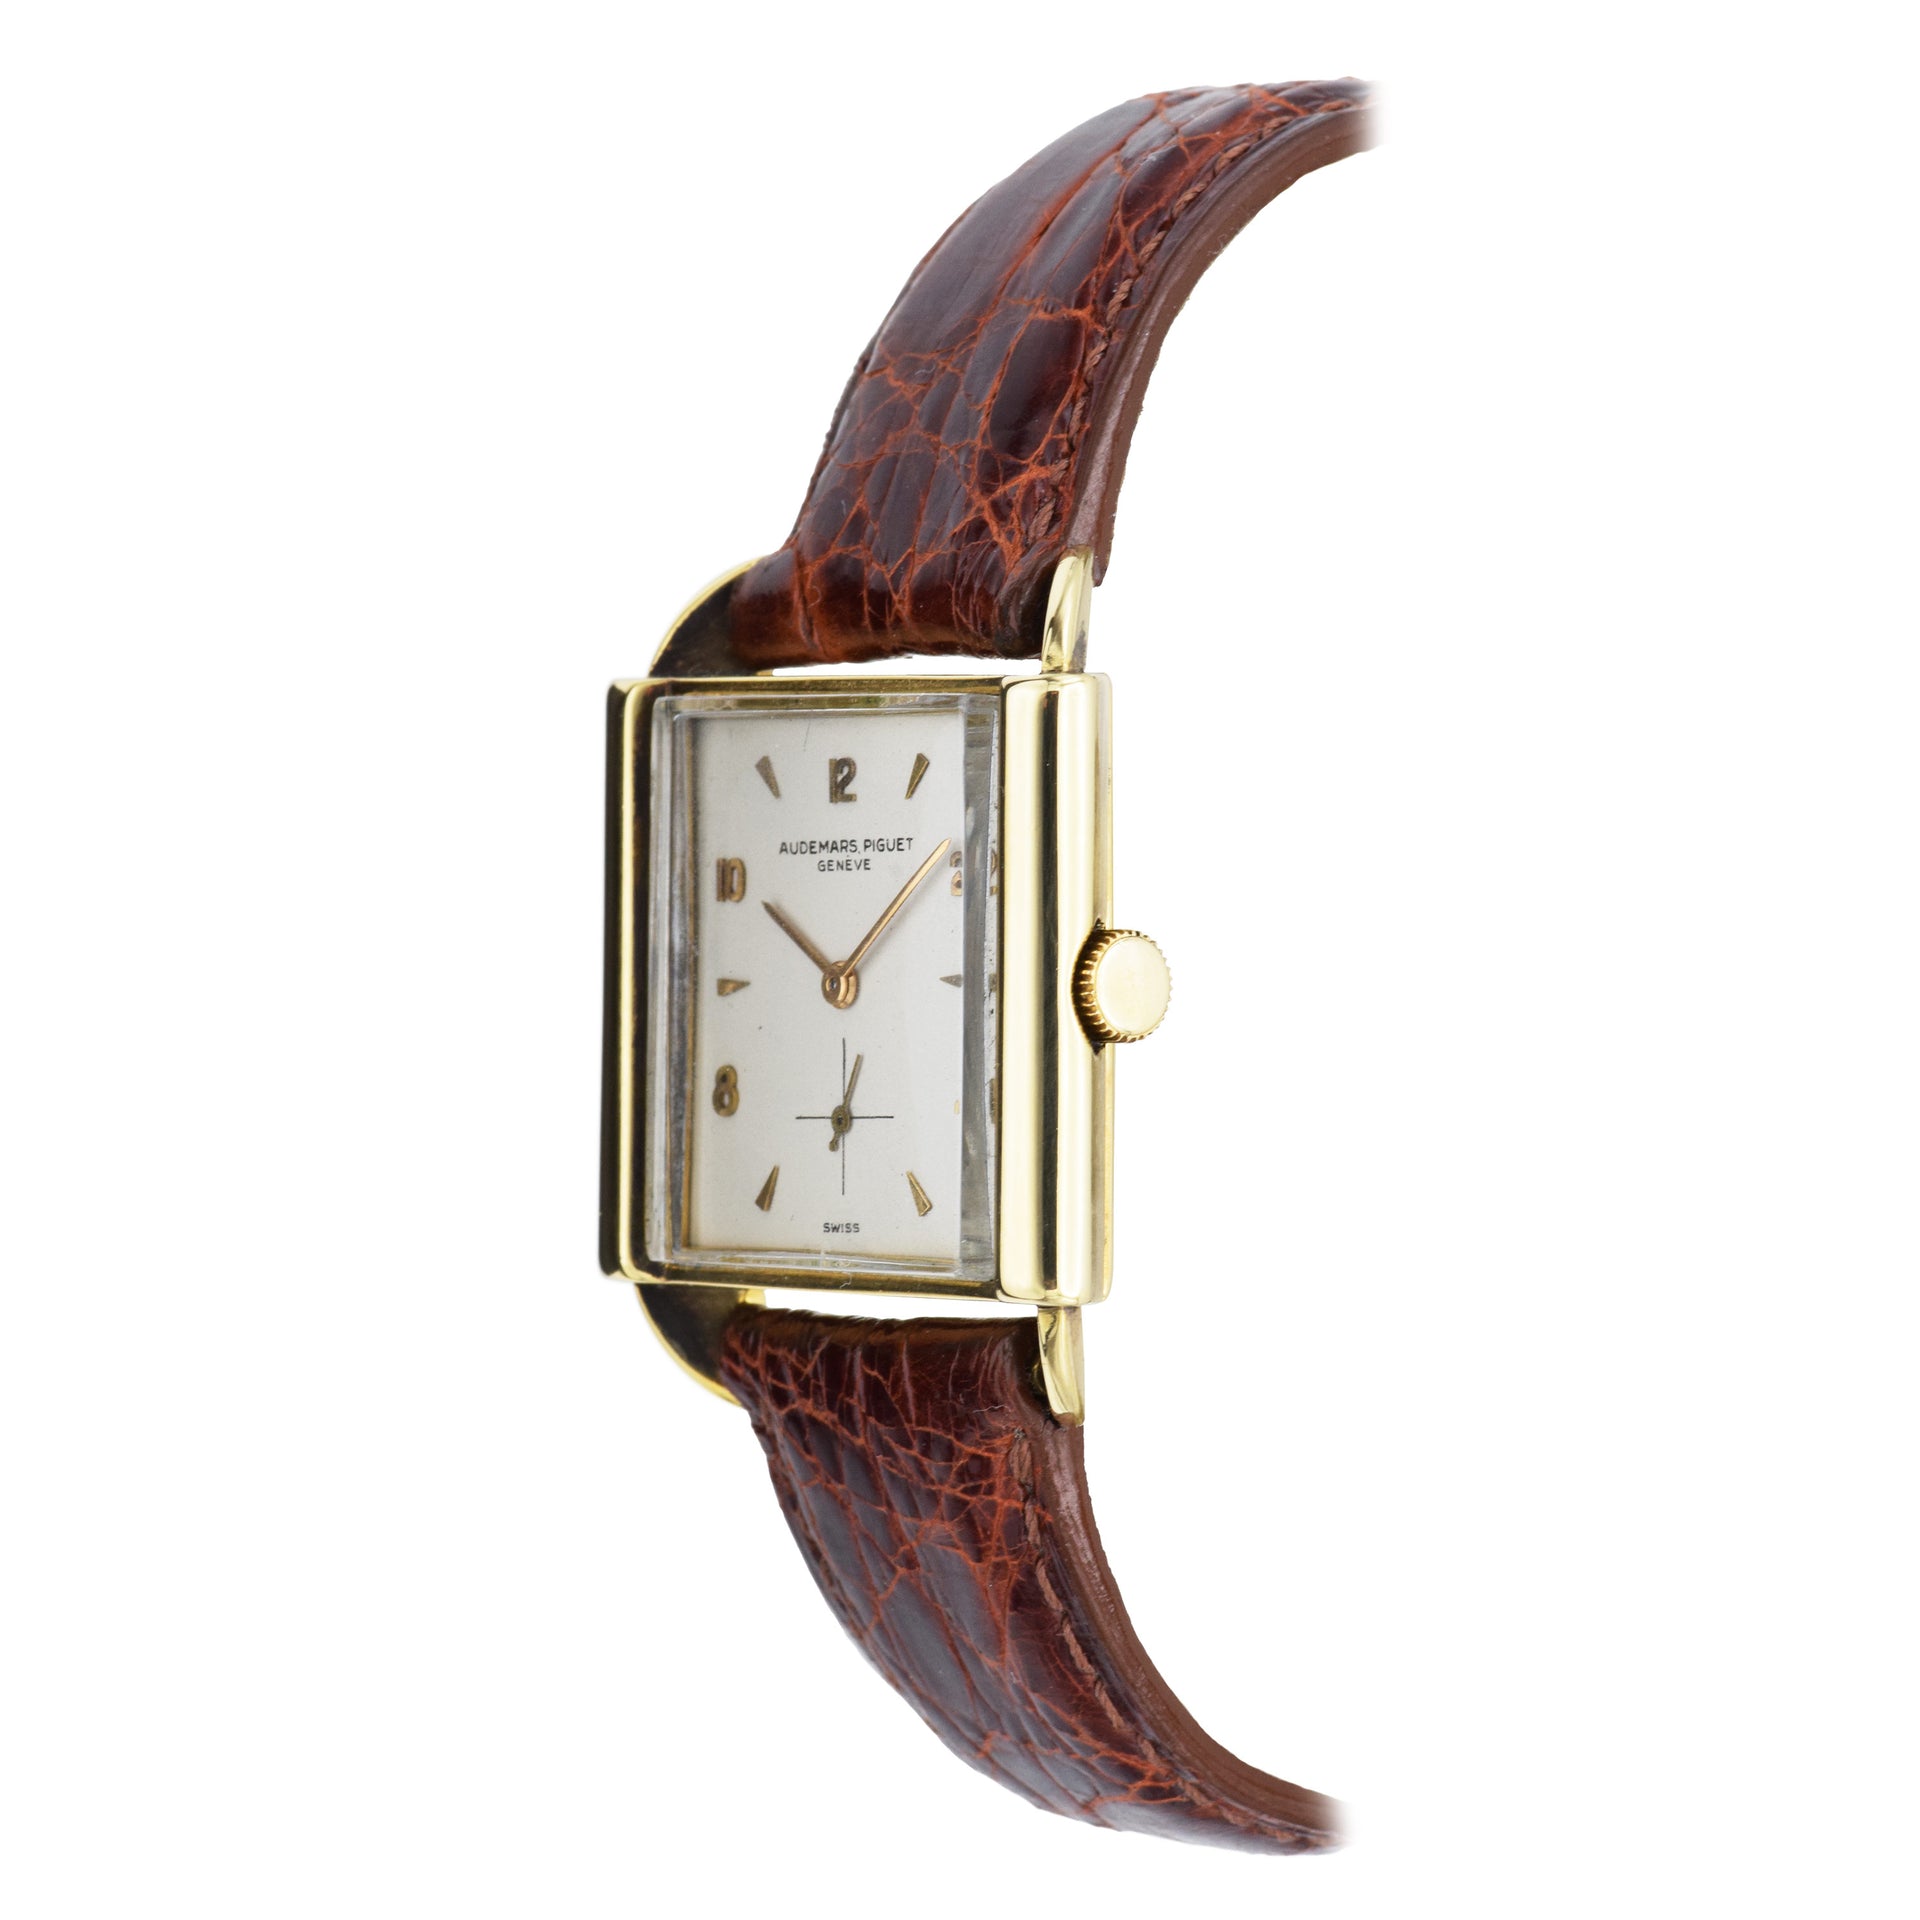 Vintage 1940s Audemars Piguet Watch